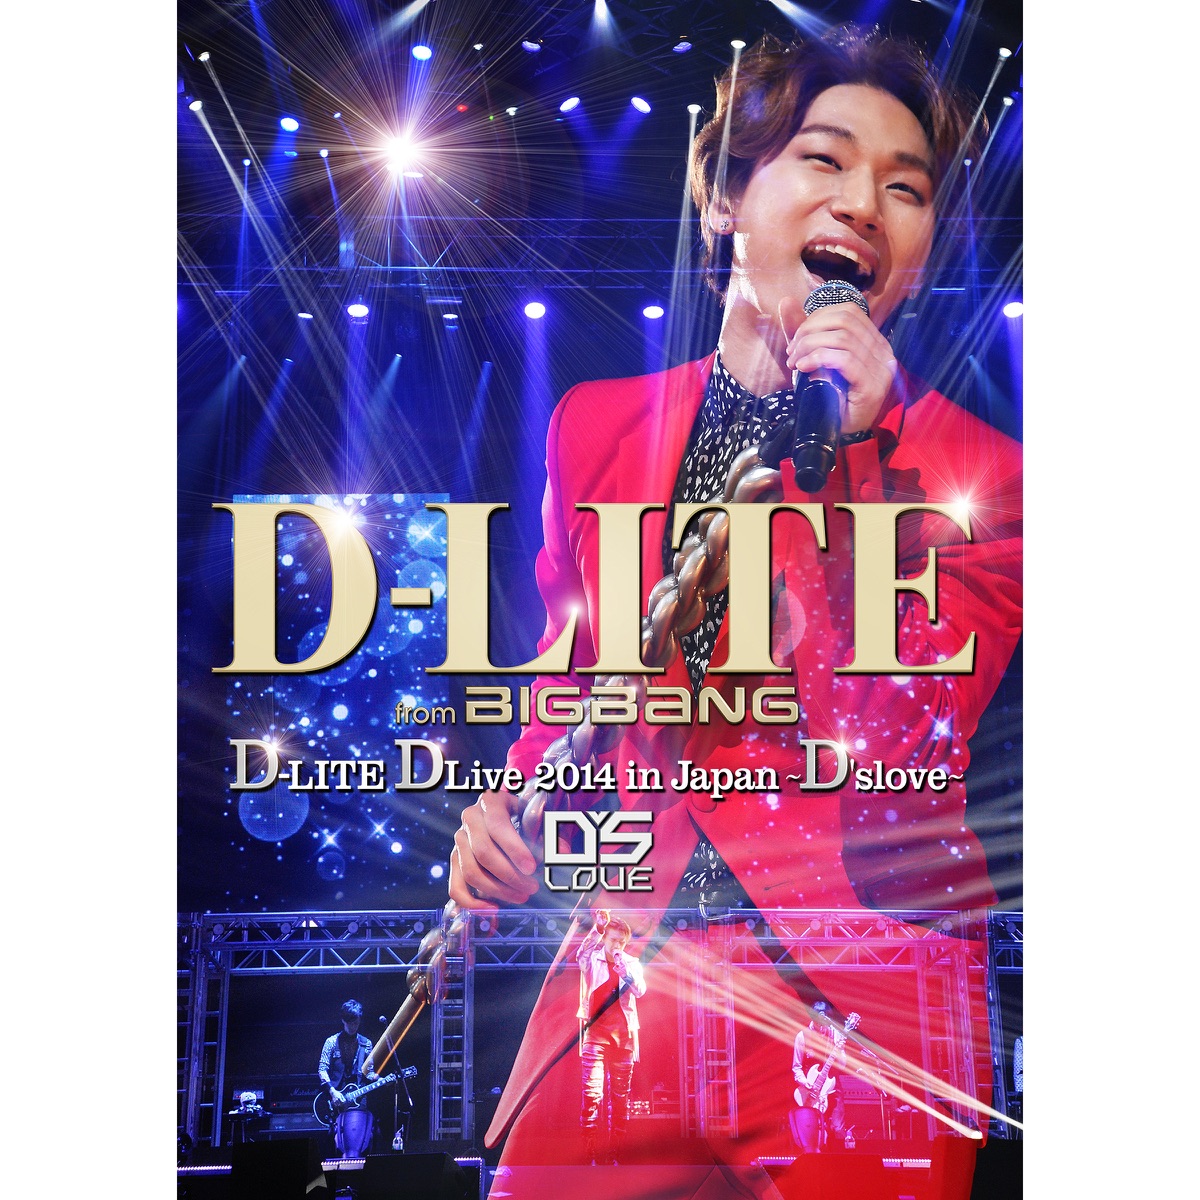 D-LITE (from BIGBANG) – D-LITE DLive 2014 in Japan ~D’slove~